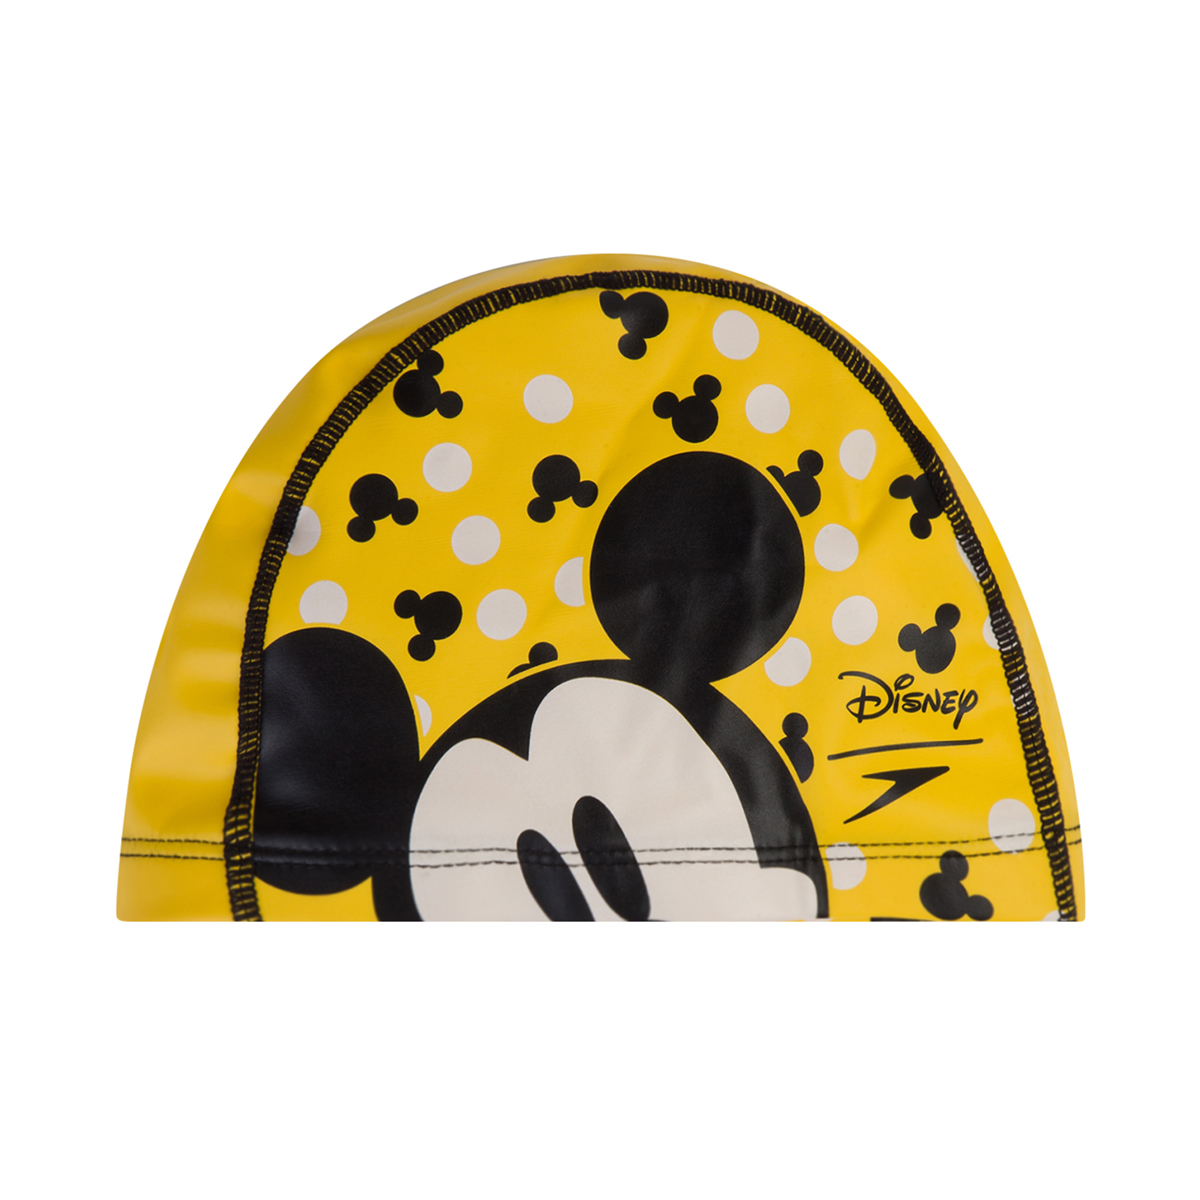 Speedo Disney Printed Junior Pace Cap Mickey - Empire Yellow / Black